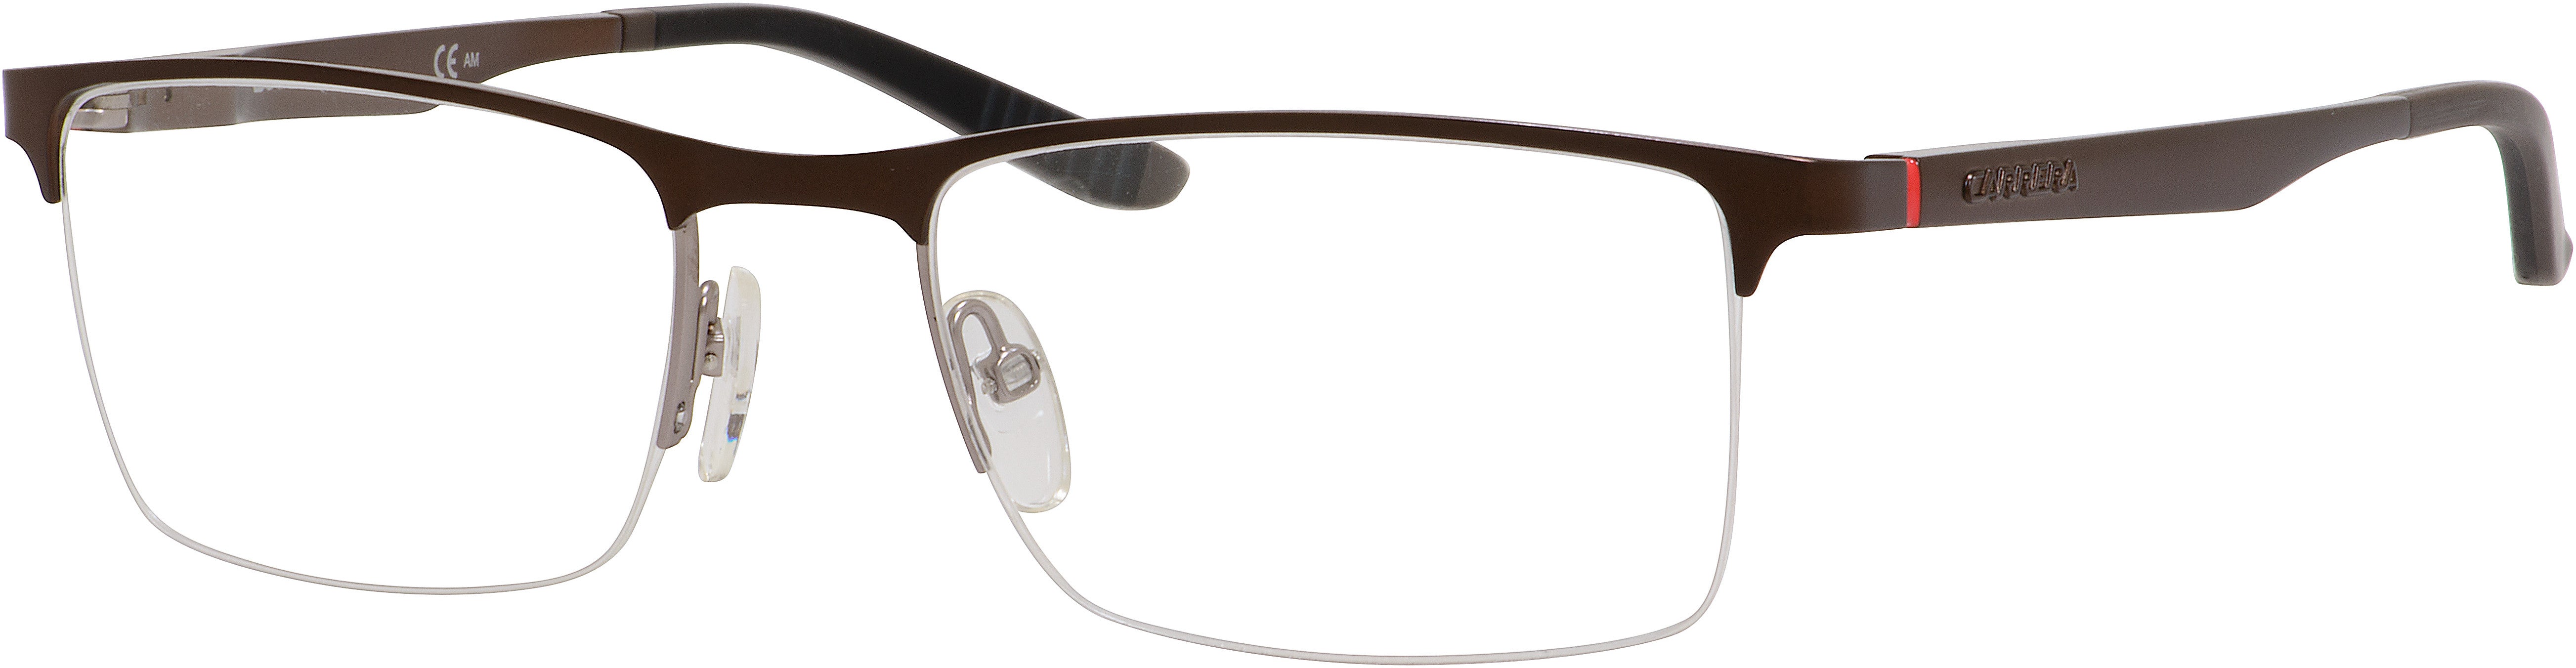  Carrera 8810 Rectangular Eyeglasses 0A24-0A24  Brown Ruthenium (00 Demo Lens)